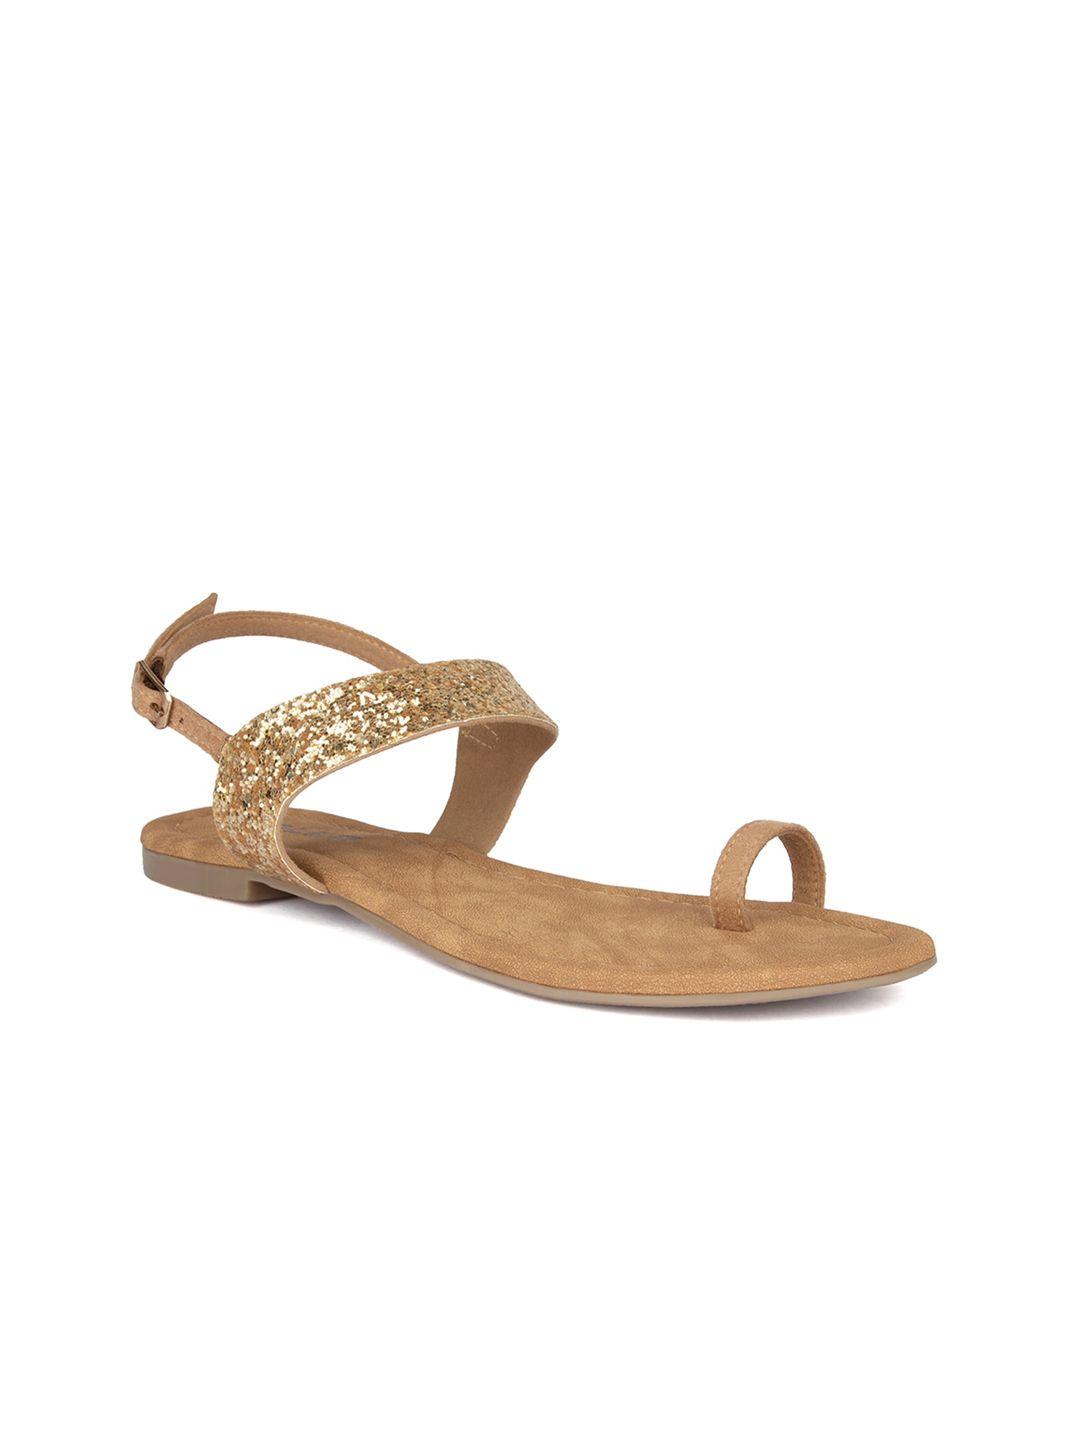 soles women gold-toned embellished one toe flats